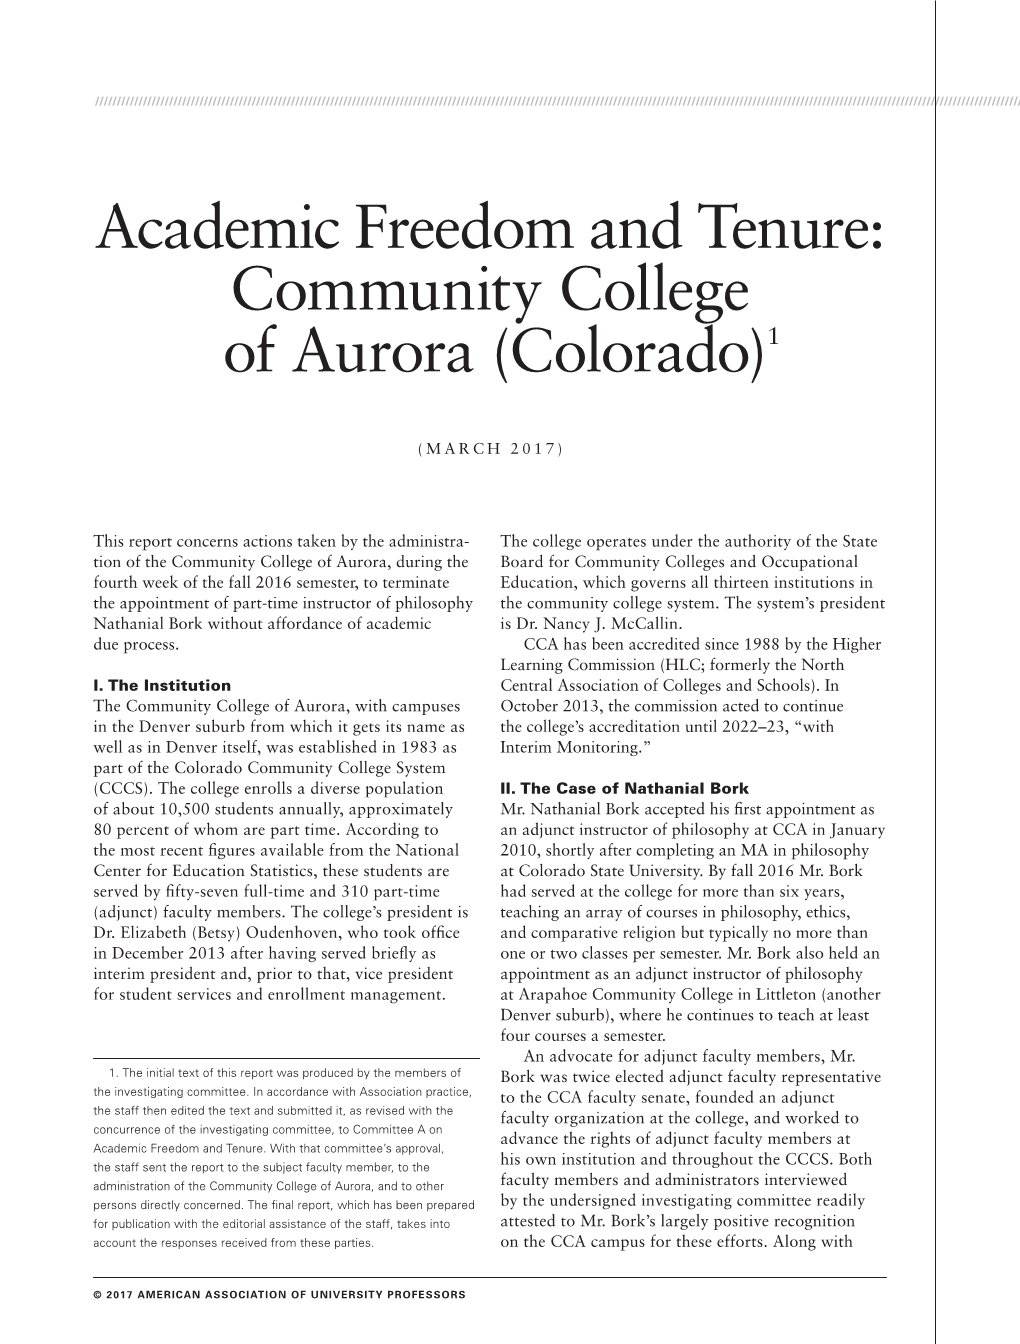 Community College of Aurora (Colorado)1